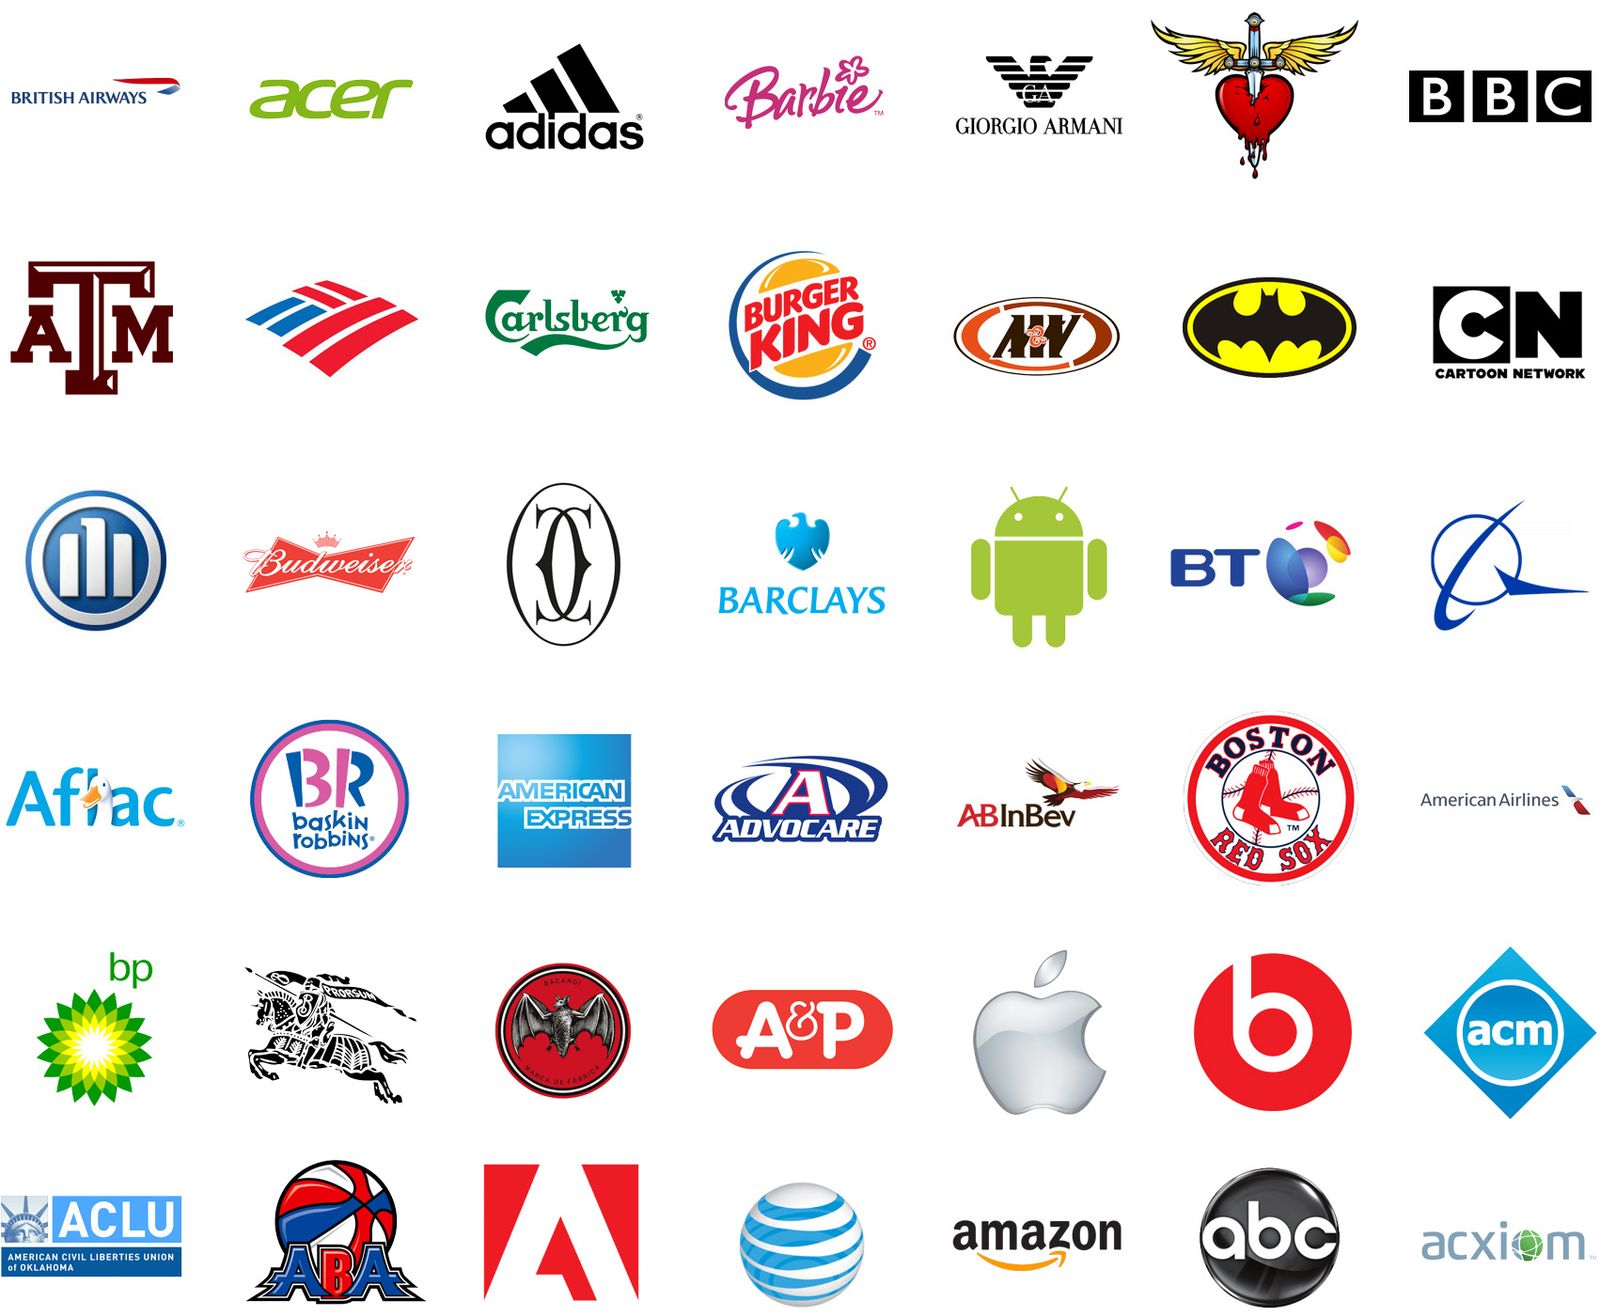 All logos